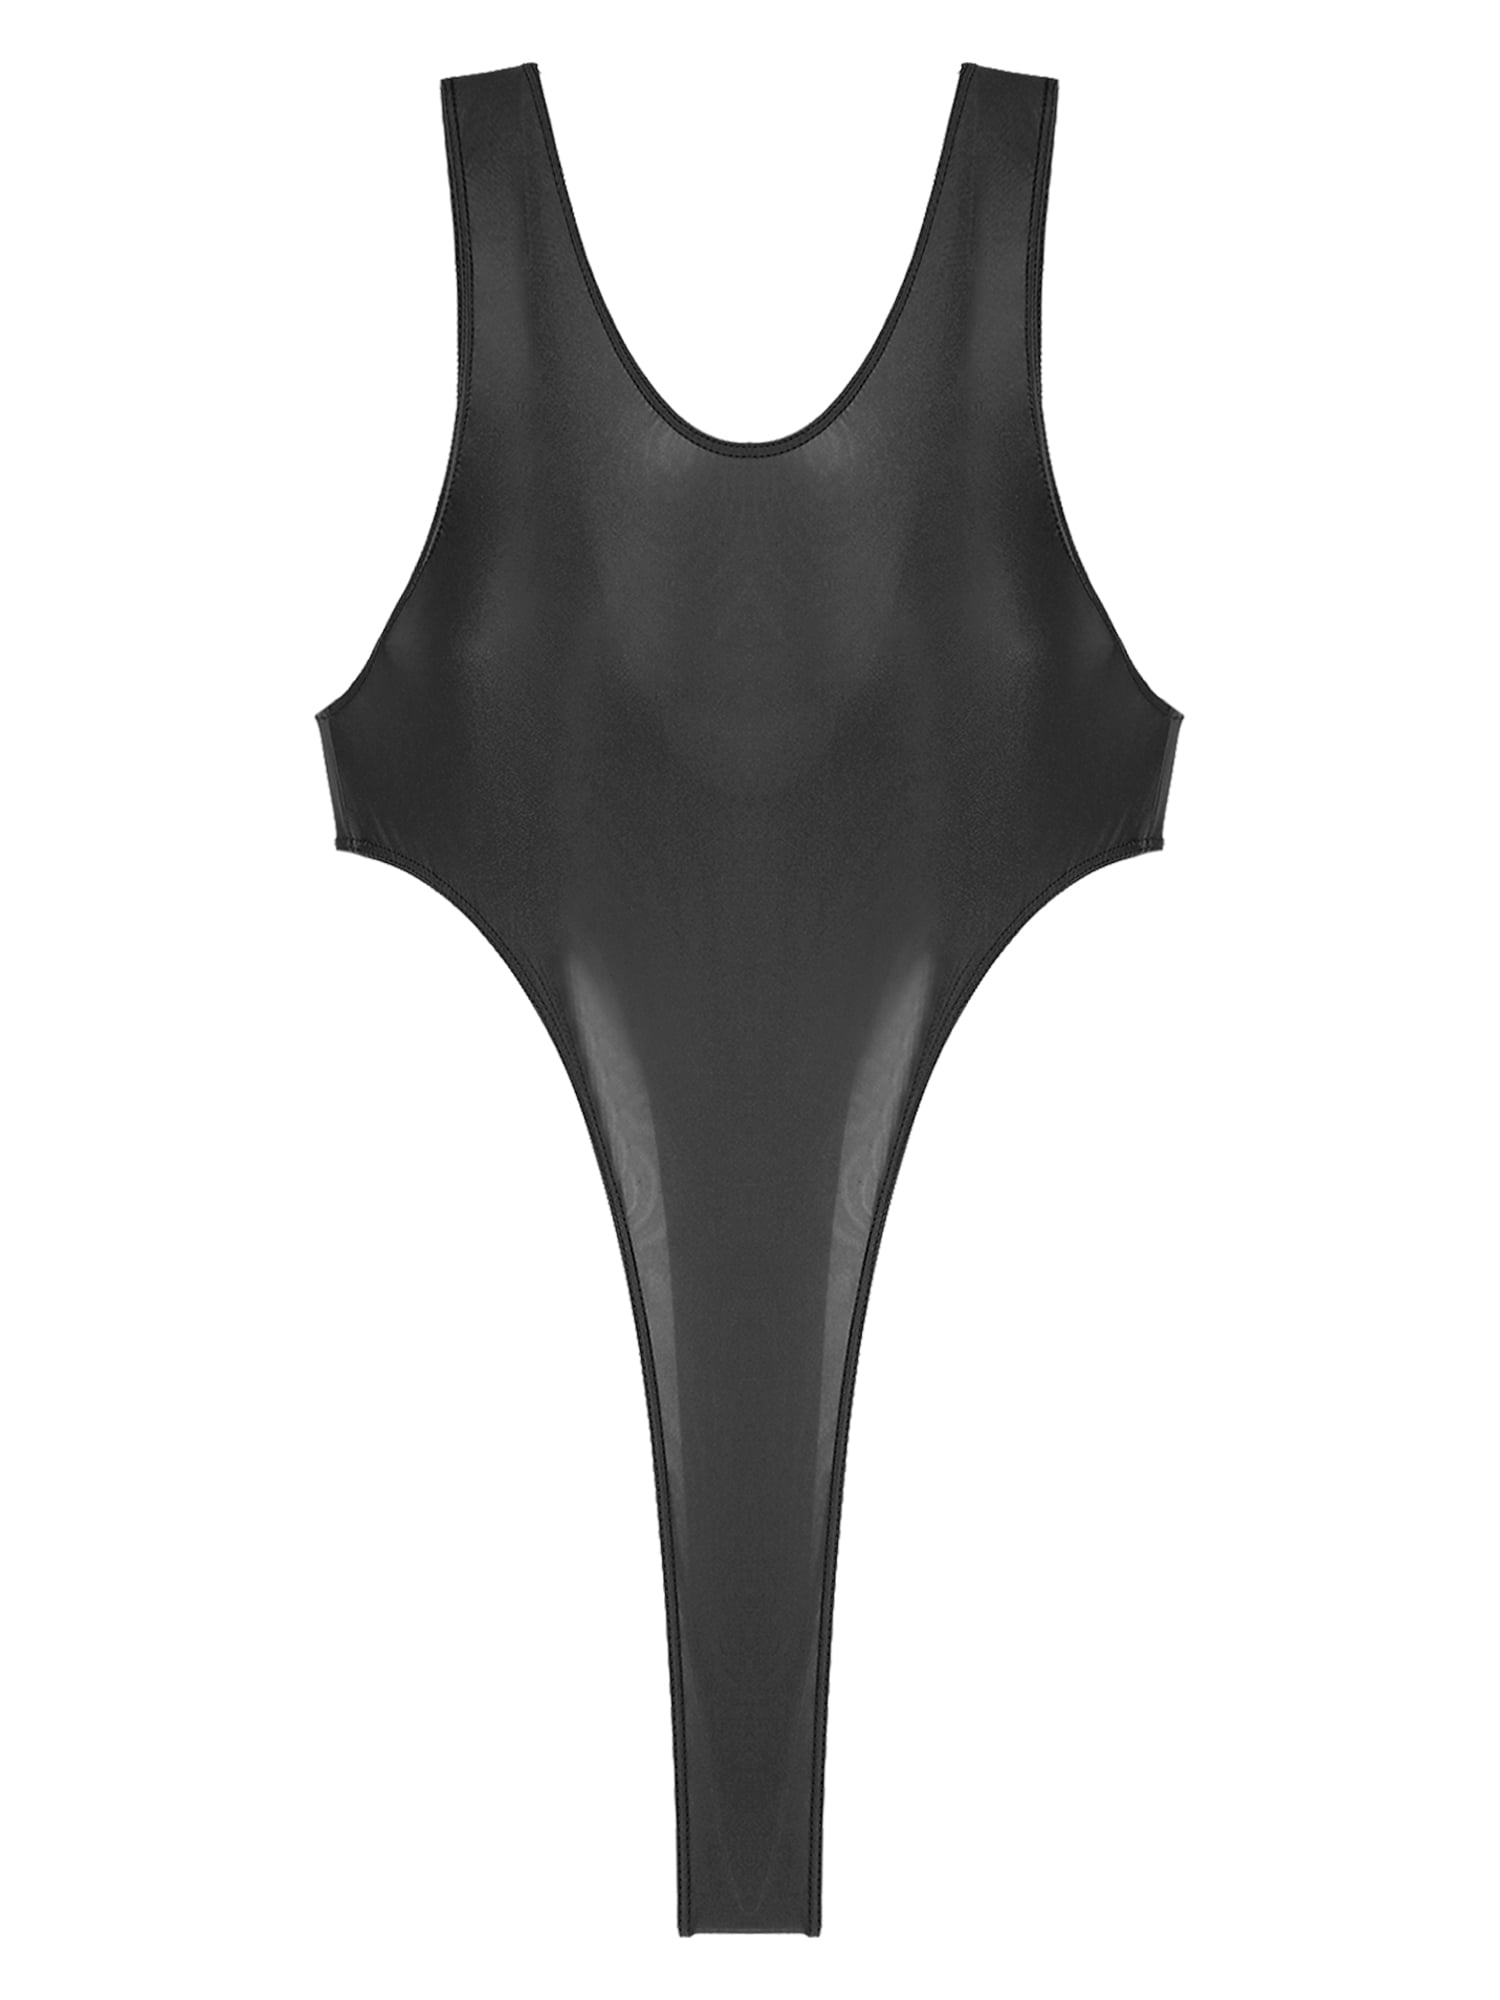 Buy ULTRA high-neck leotard by Grand Prix (polyamide micro+mesh,  black+nude, 158cm) at the Grand Prix store